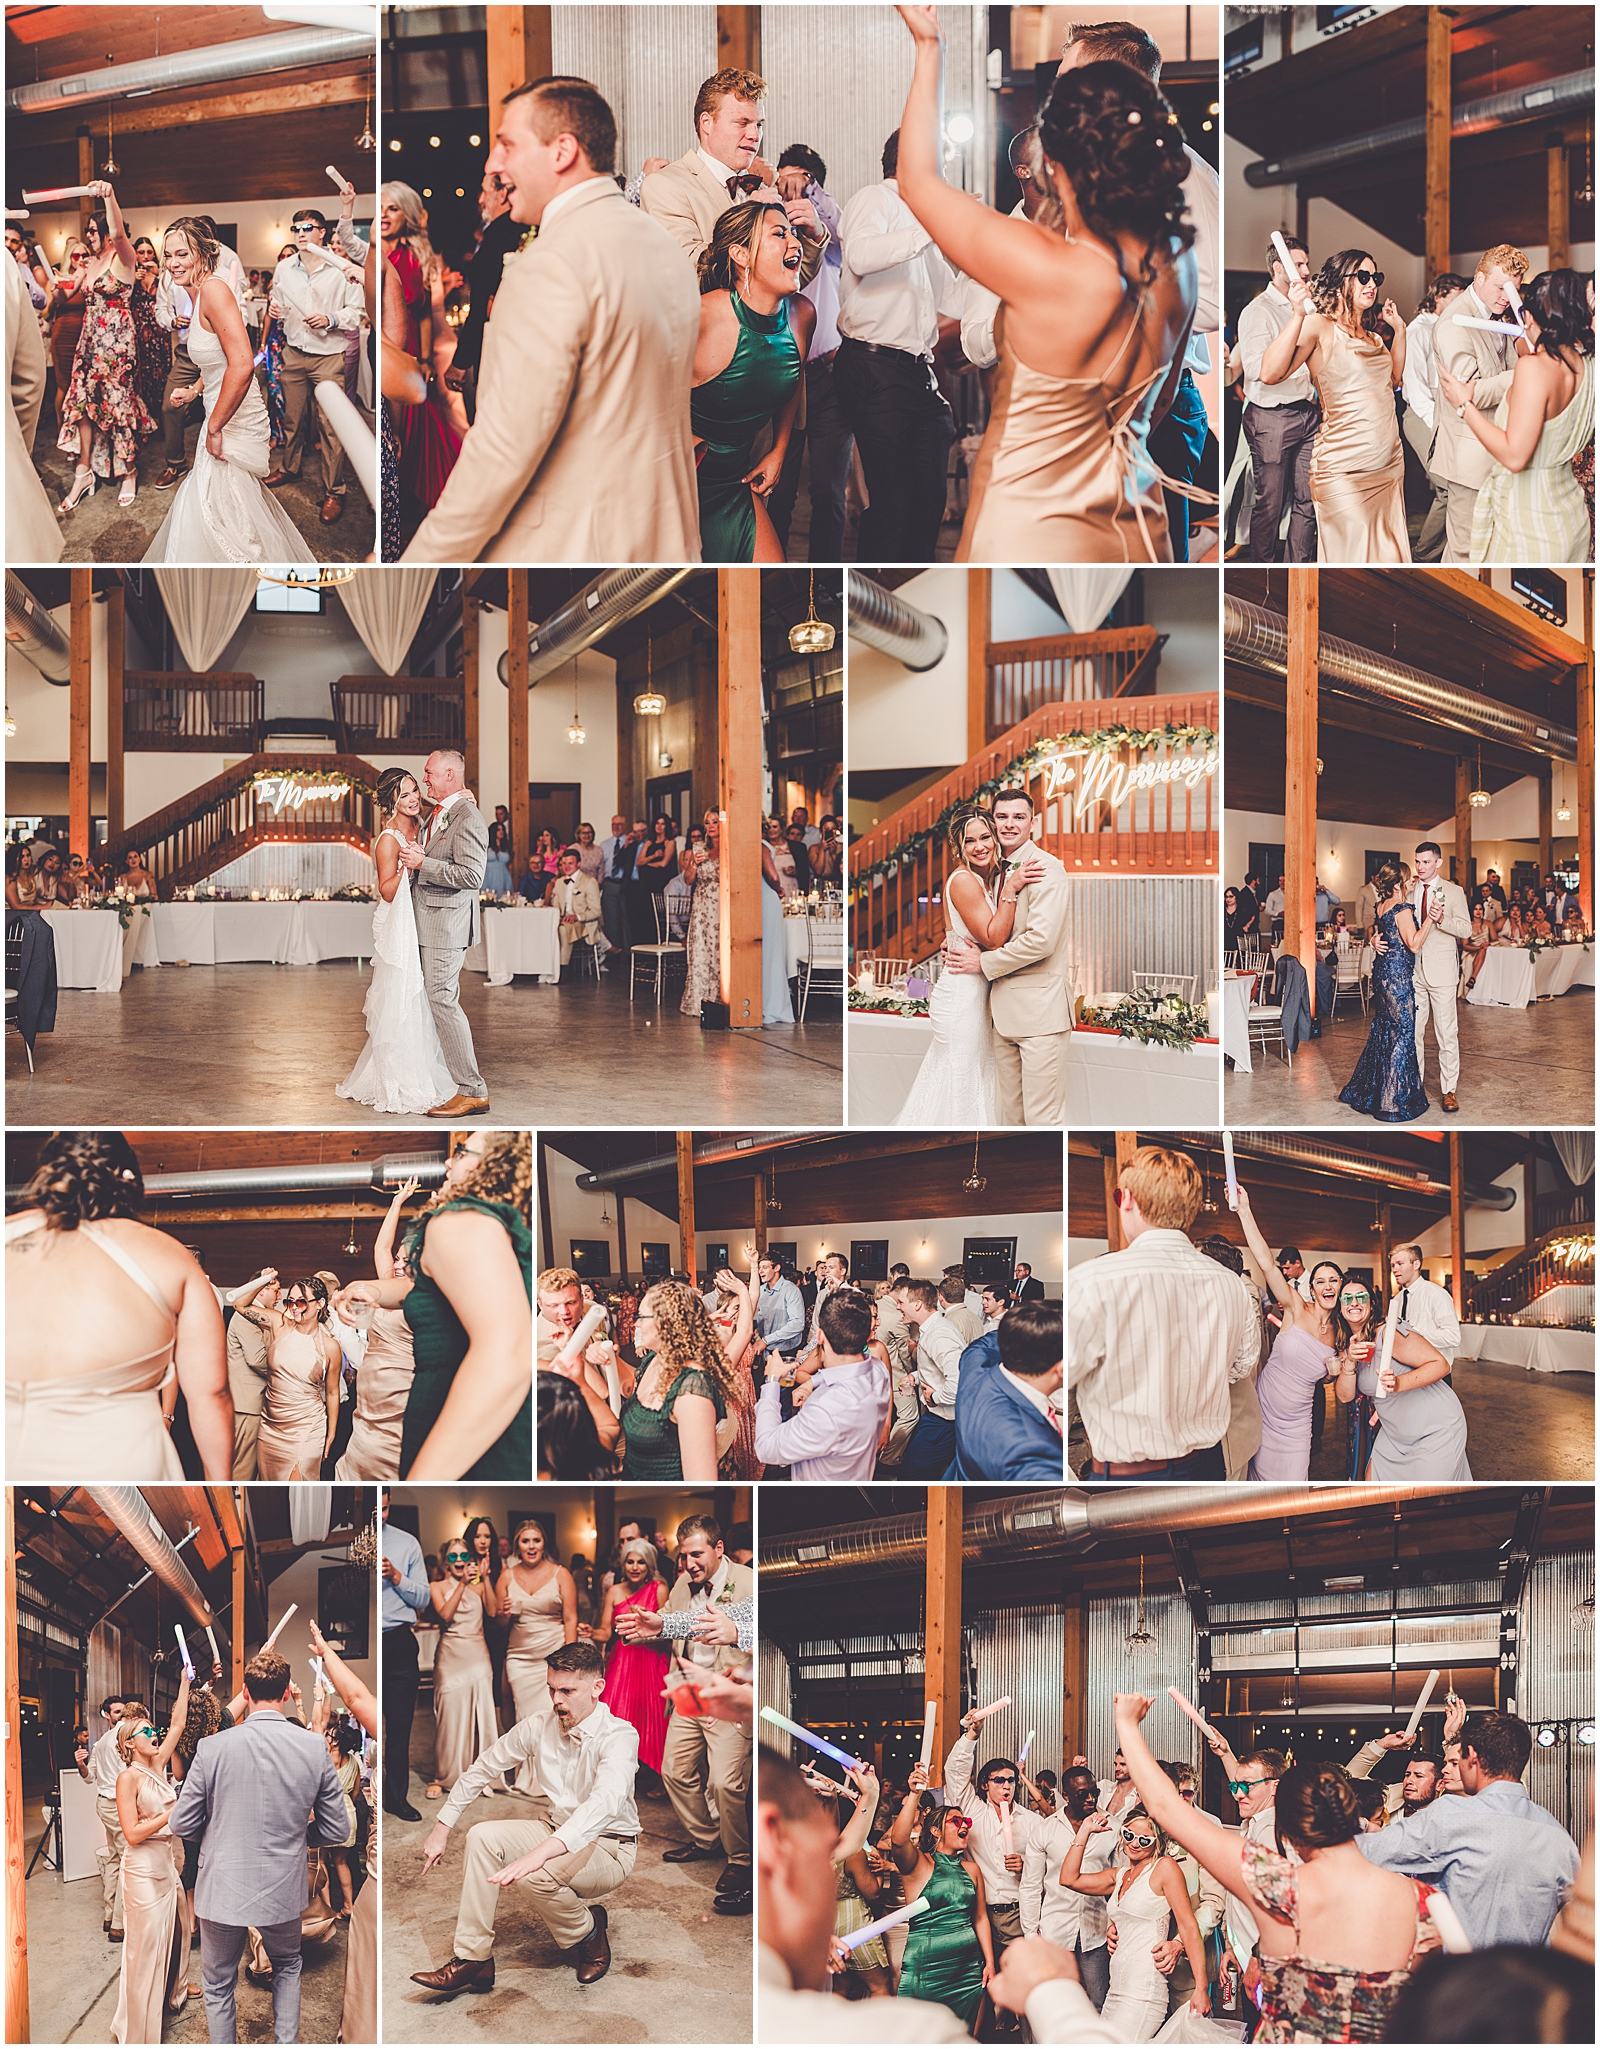 Sidney and Brendan's summer White Oak Farm Venue wedding in Michigan City with Chicagoland wedding photographer Kara Evans Photographer.